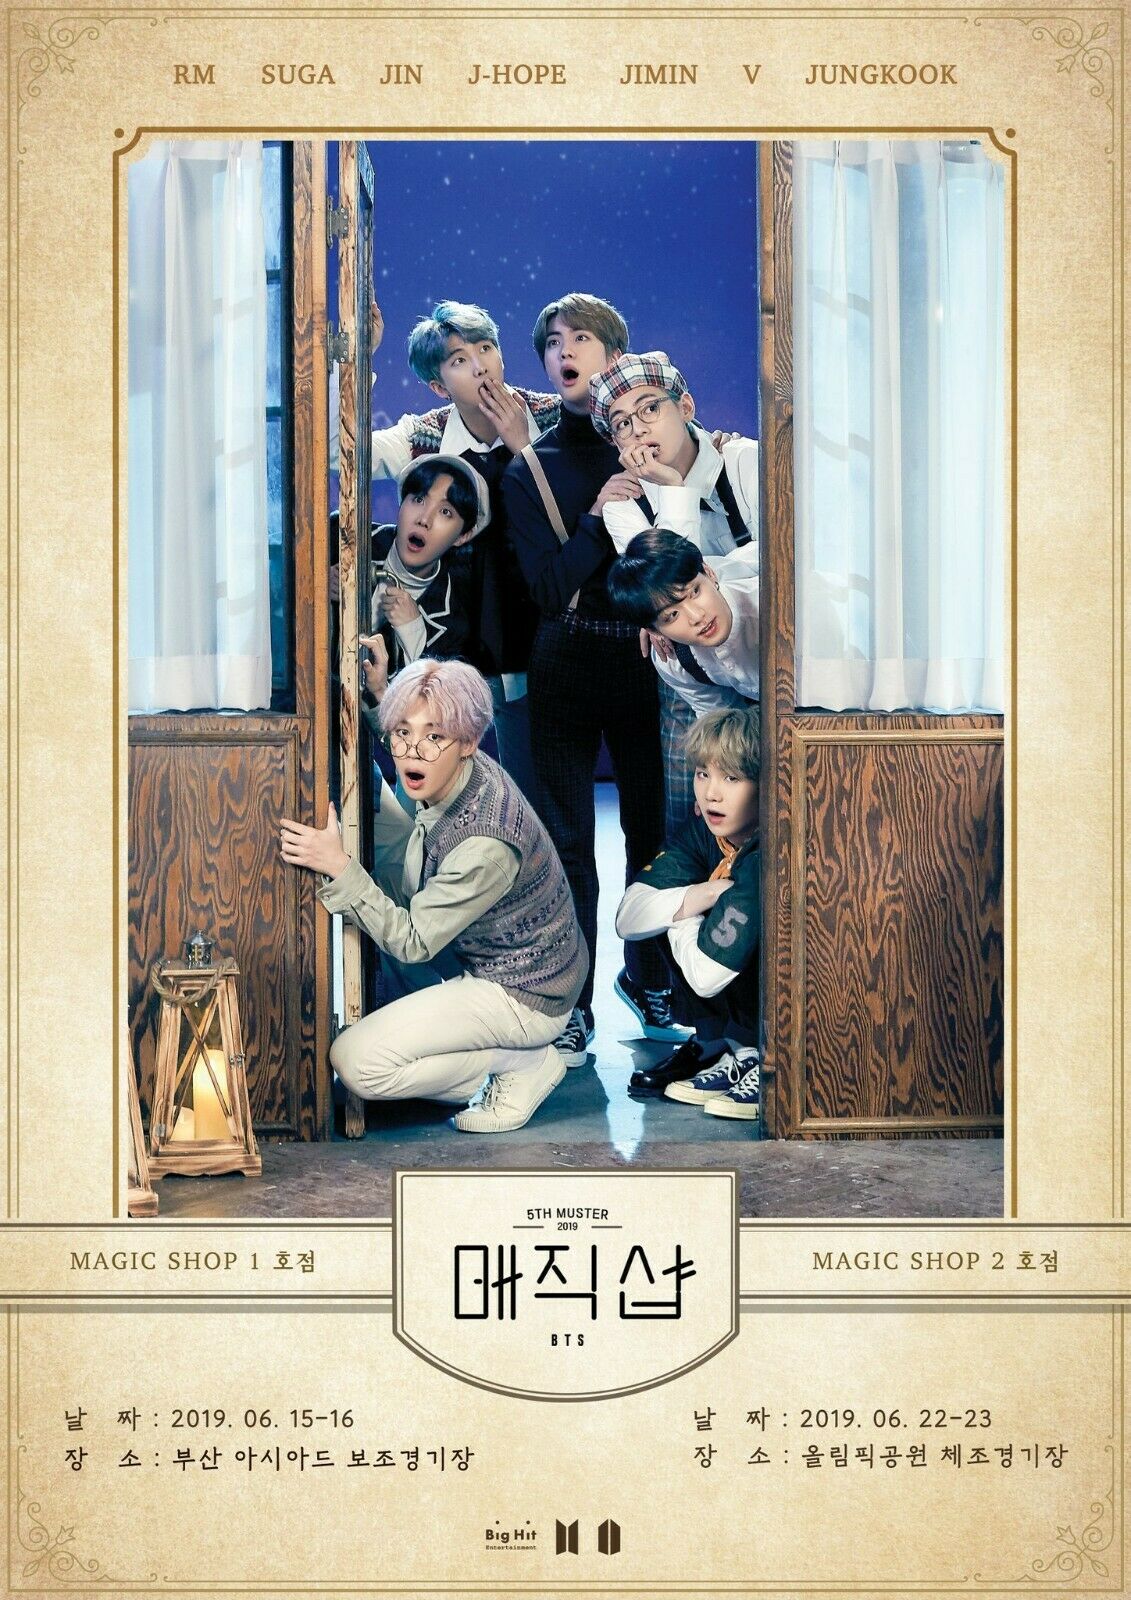 良品 BTS MAGIC SHOP magicshop Blu-ray 日本公演 - CD